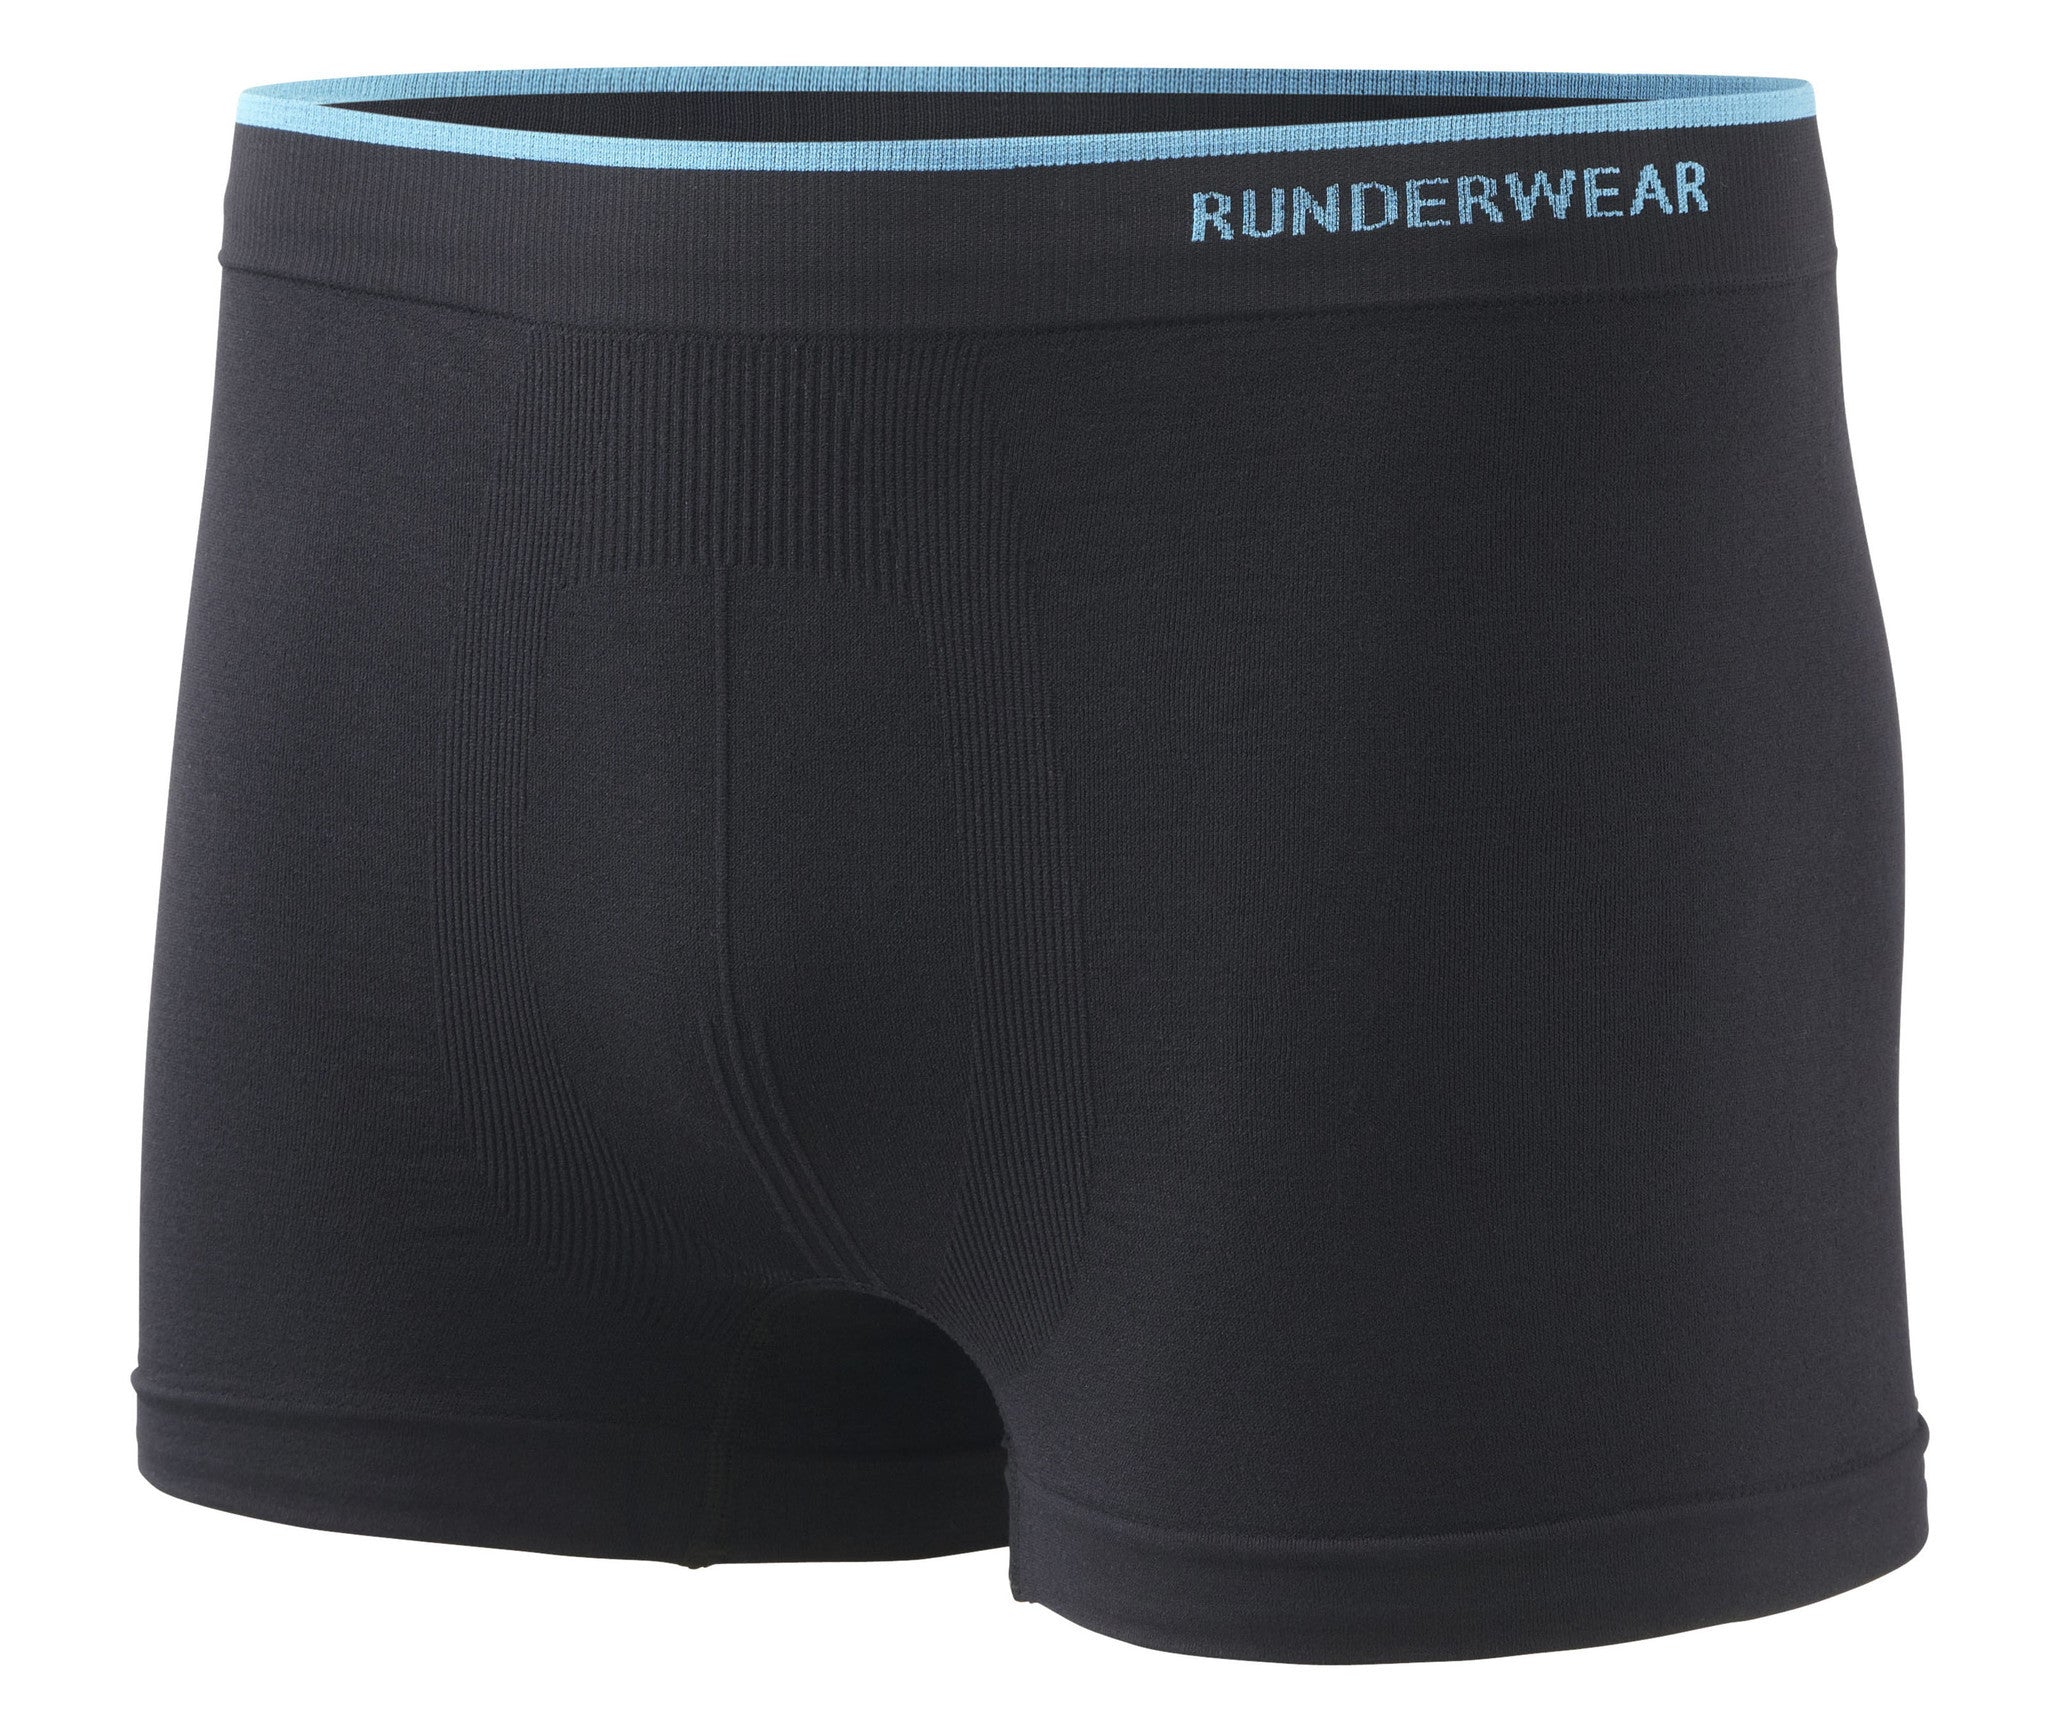 Men's Runderwear Running and Multi Sport Boxer Short Black 1